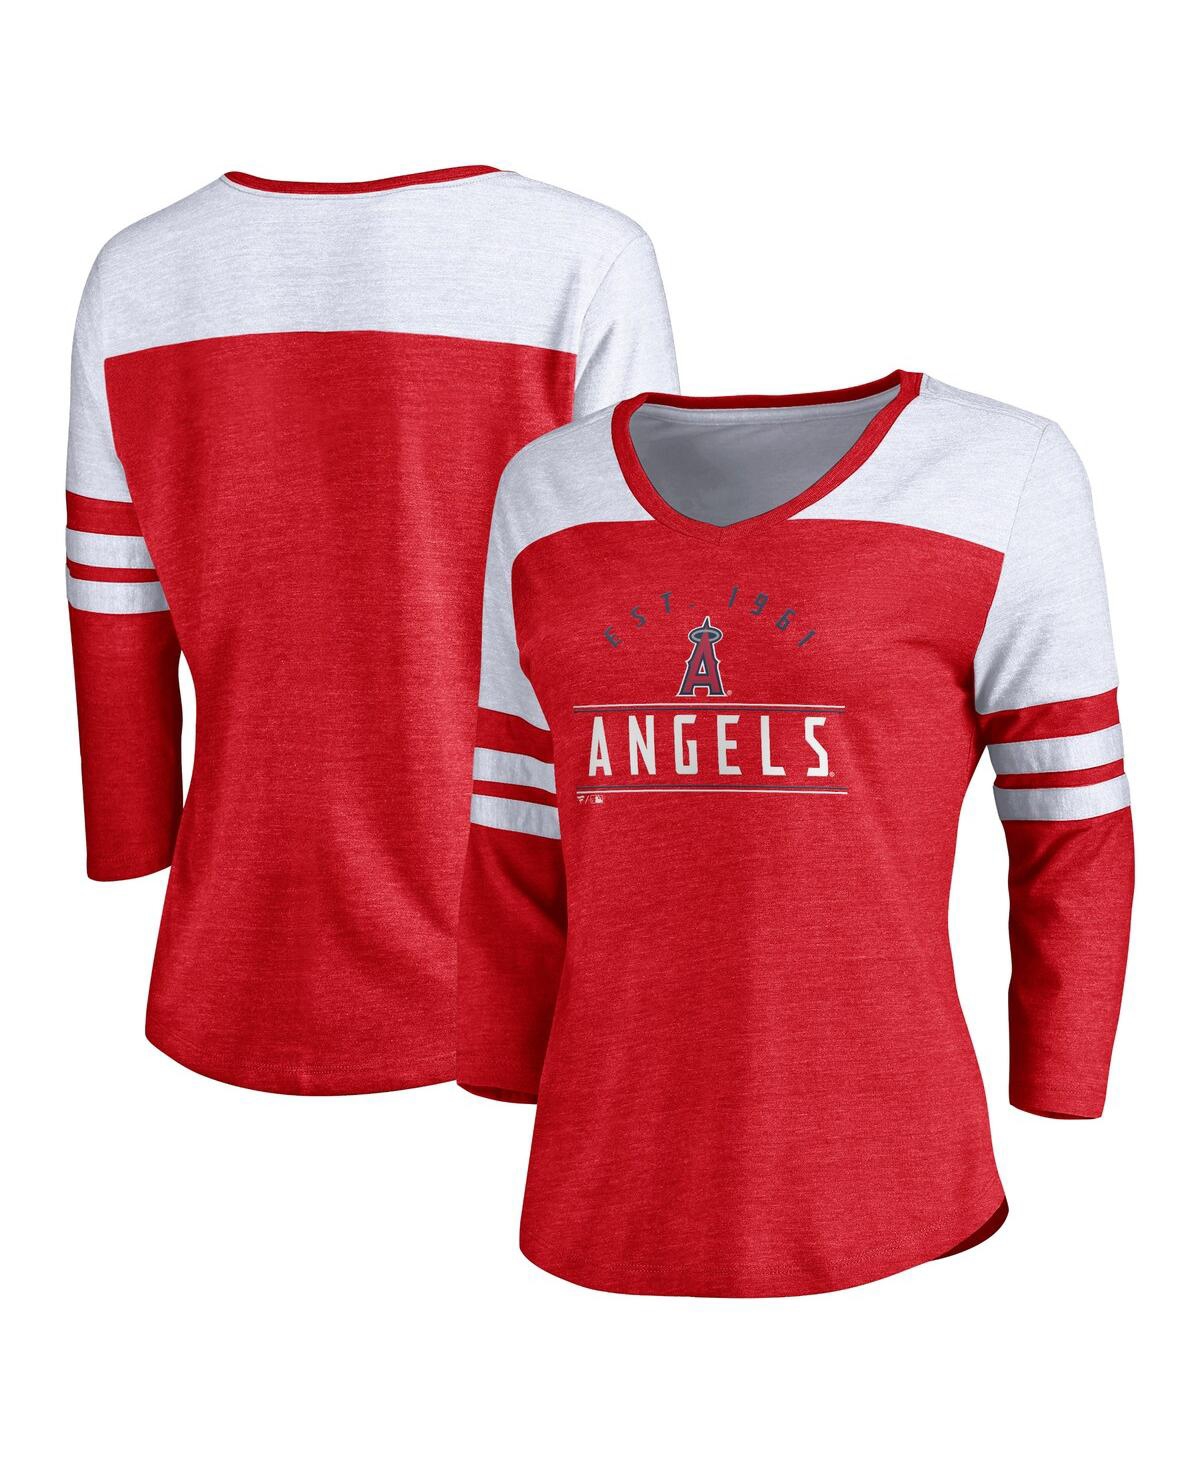 Men's Fanatics Branded Royal Los Angeles Dodgers Huntington T-Shirt